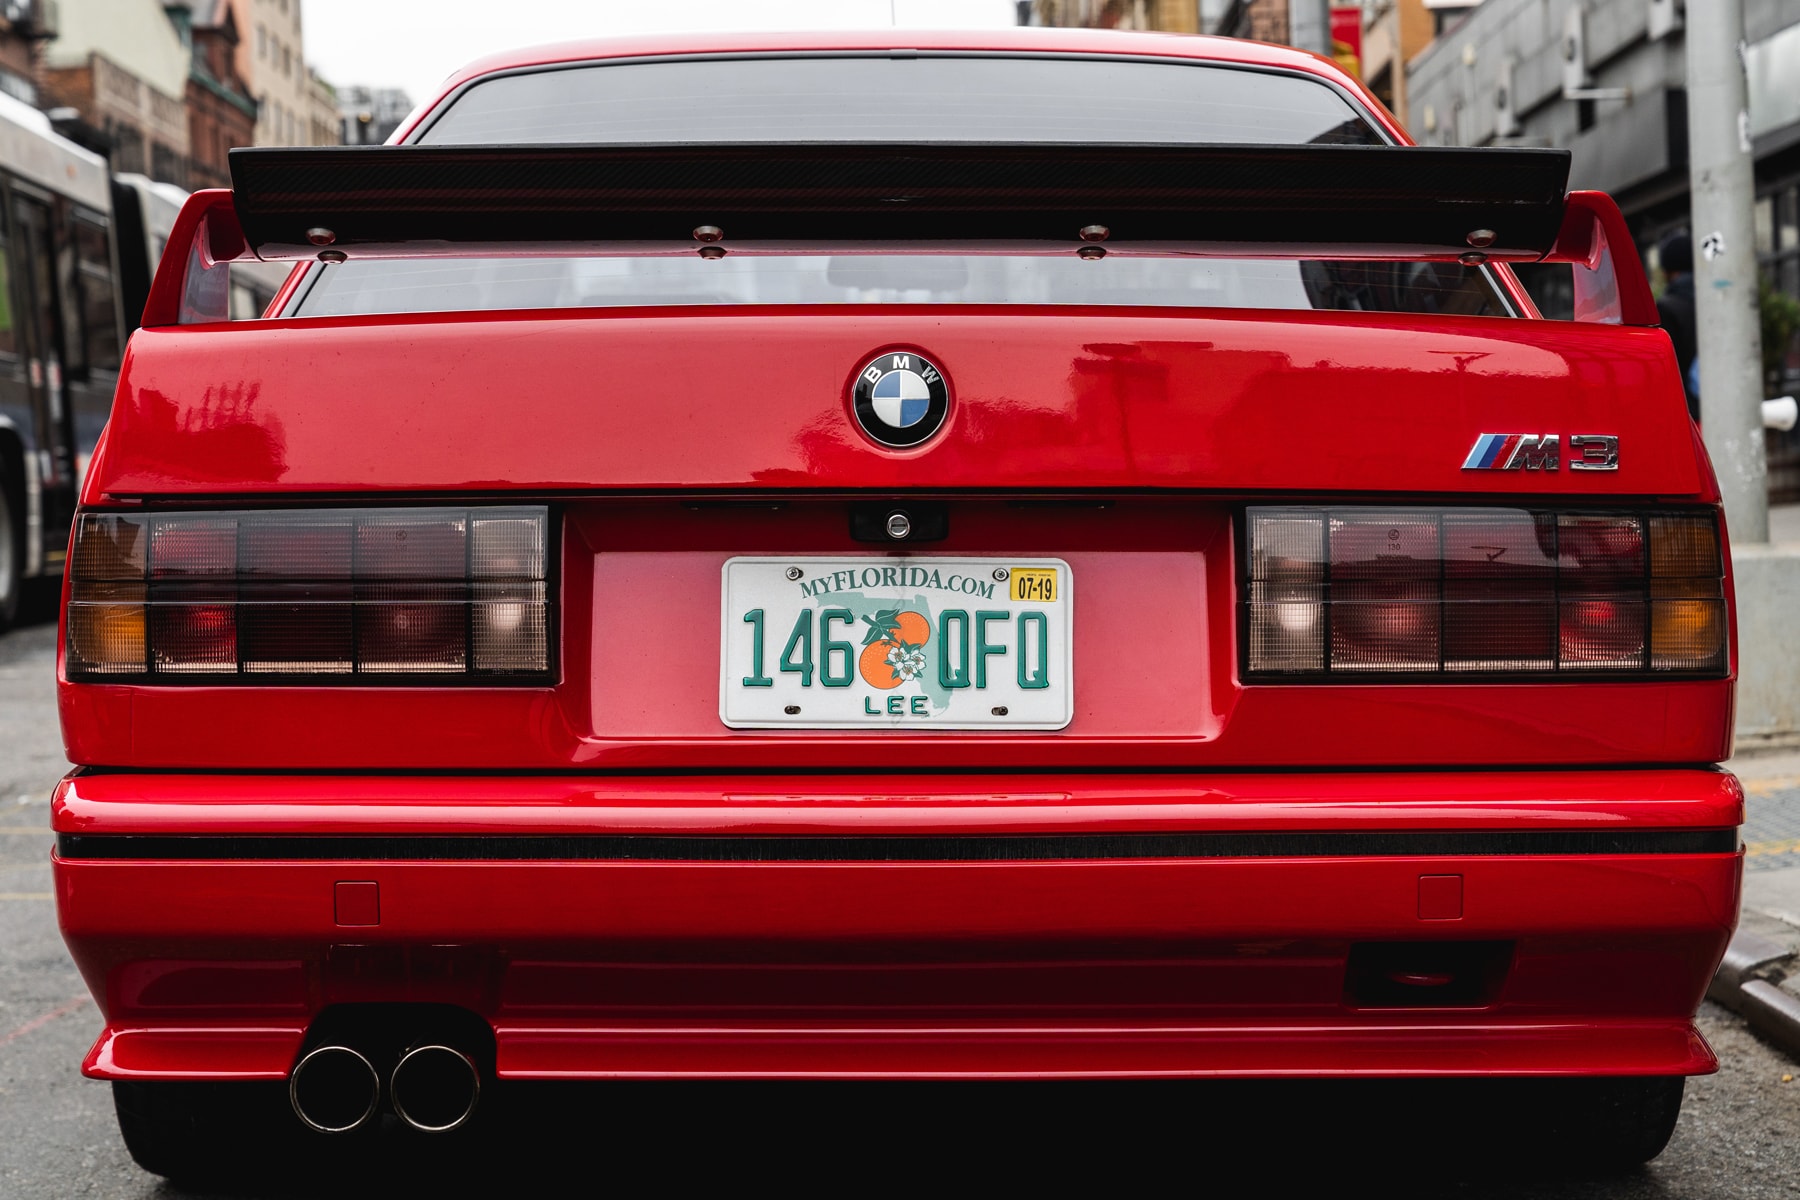 Supreme BMW M3 E30 Hot Wheels and Full Size Model Red Bimmer Wide Body Eric Whiteback Photoshoot